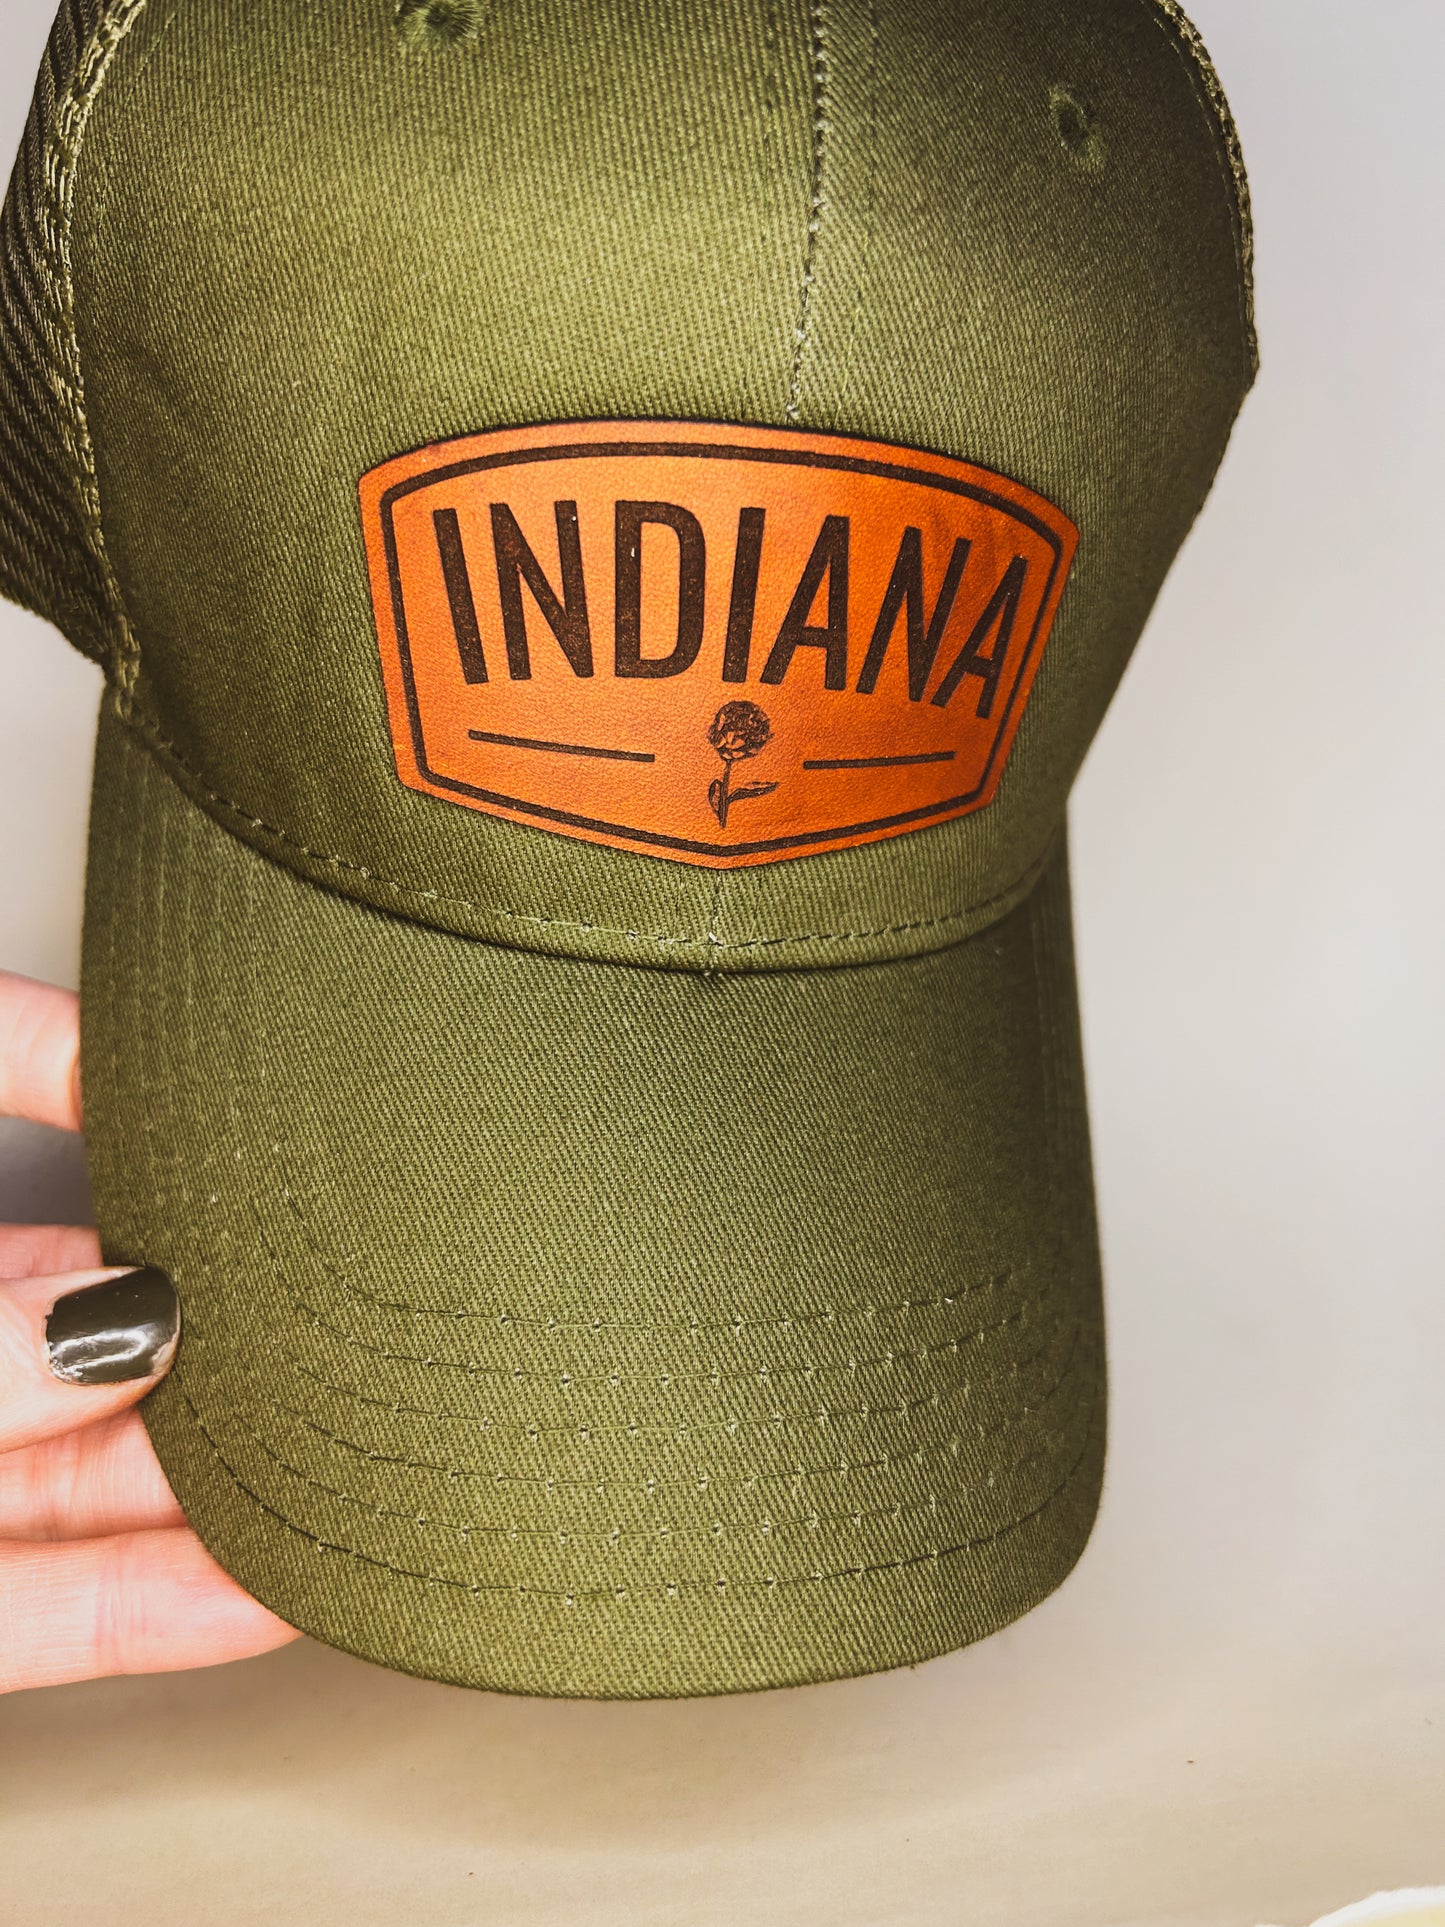 Indiana Peony Patch on Olive Baseball Hat